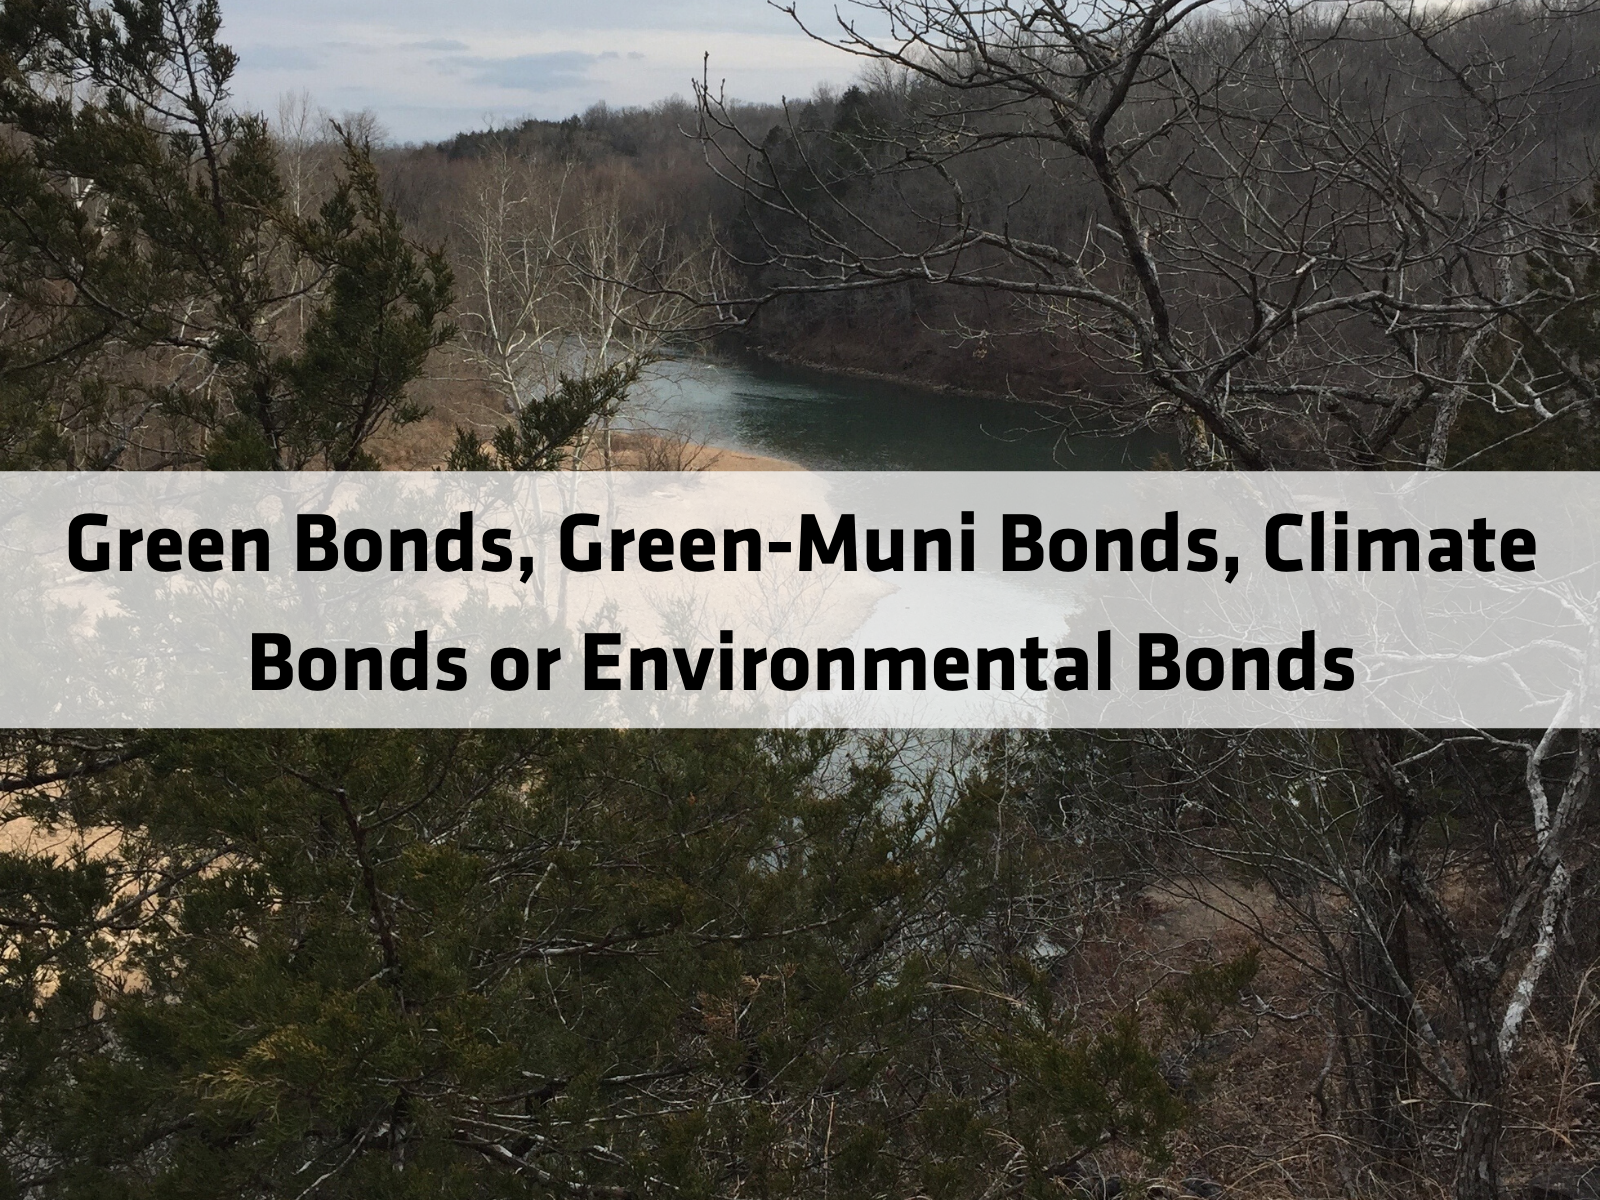 Green Bonds, Green-Muni Bonds, Climate Bonds or Environmental Bonds